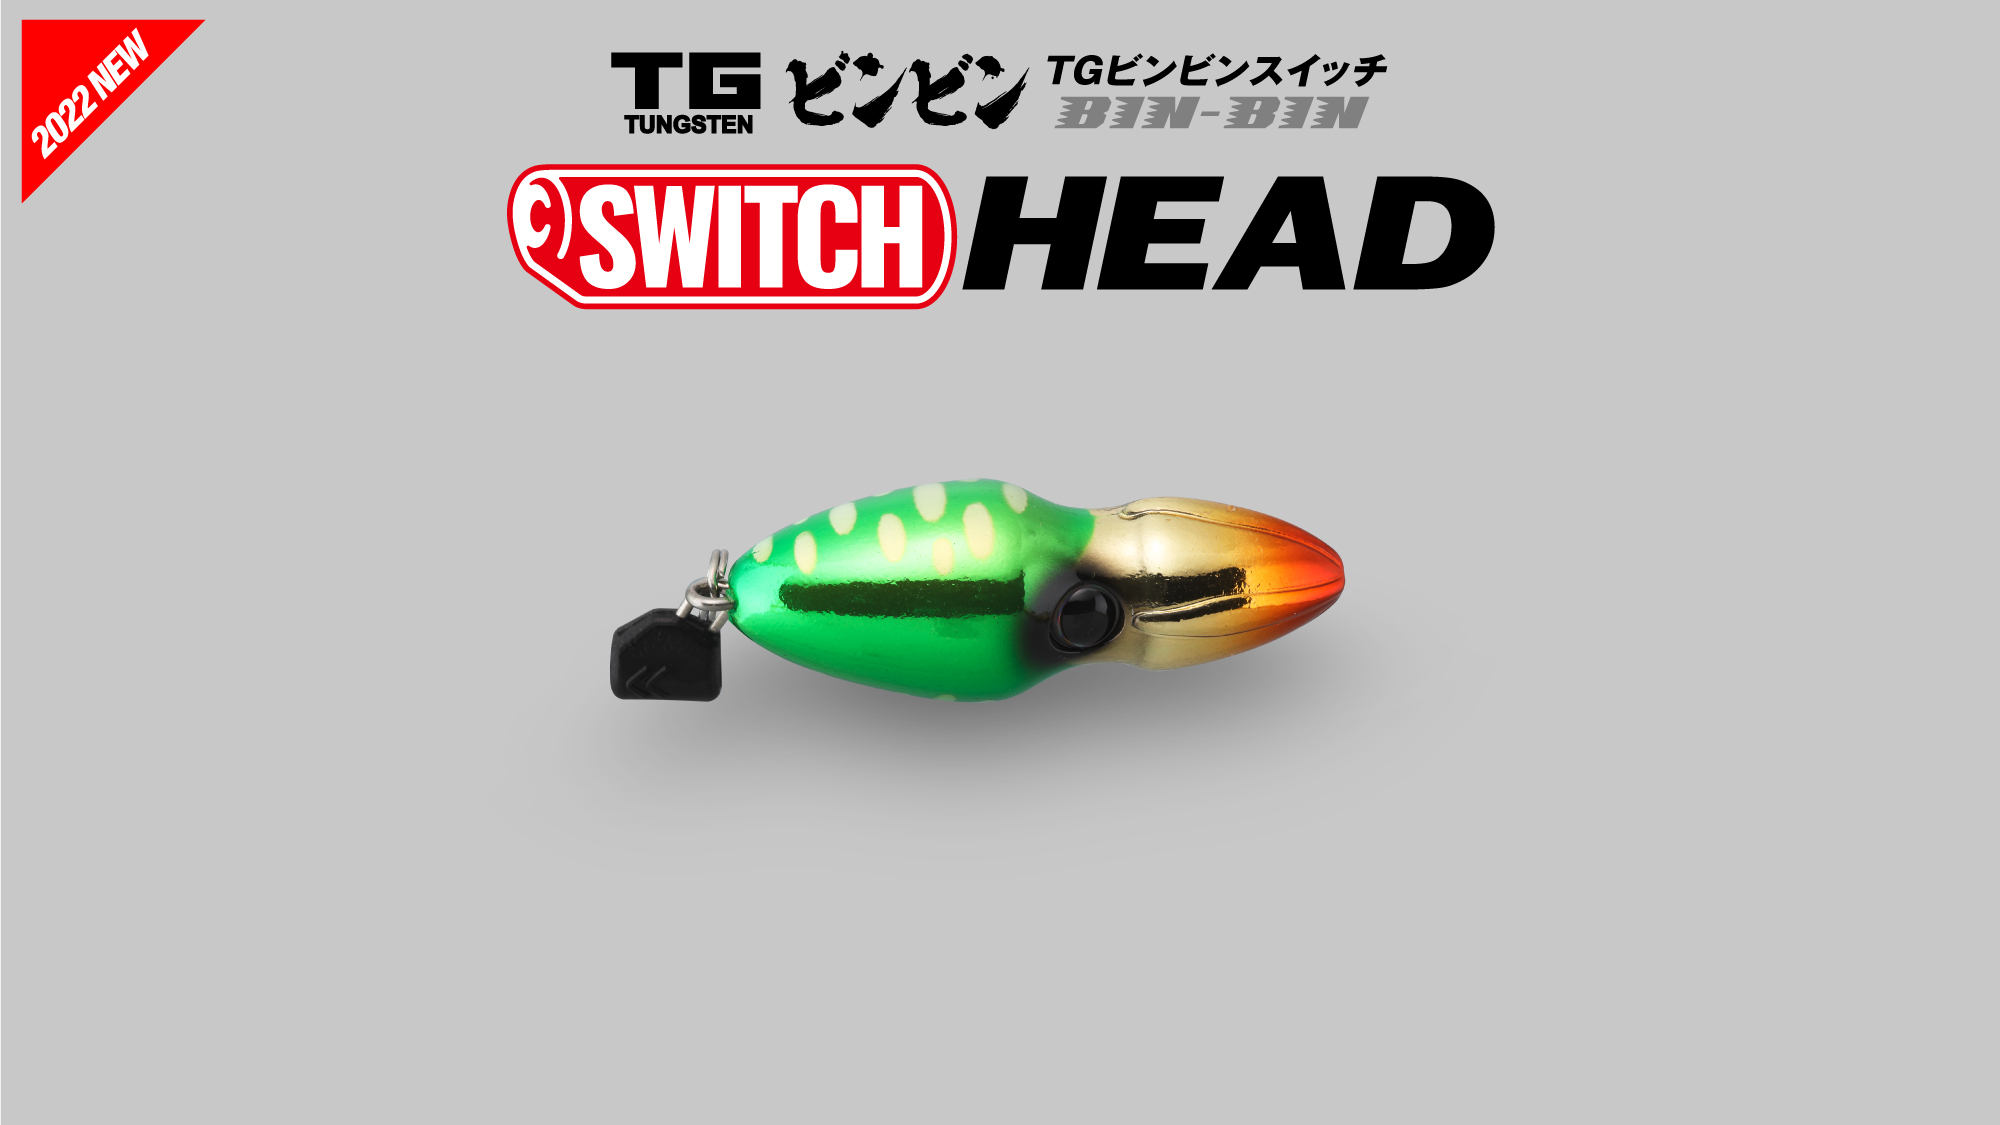 TG BINBIN SWITCH HEAD / TGビンビンスイッチ ヘッド(タングステン製 